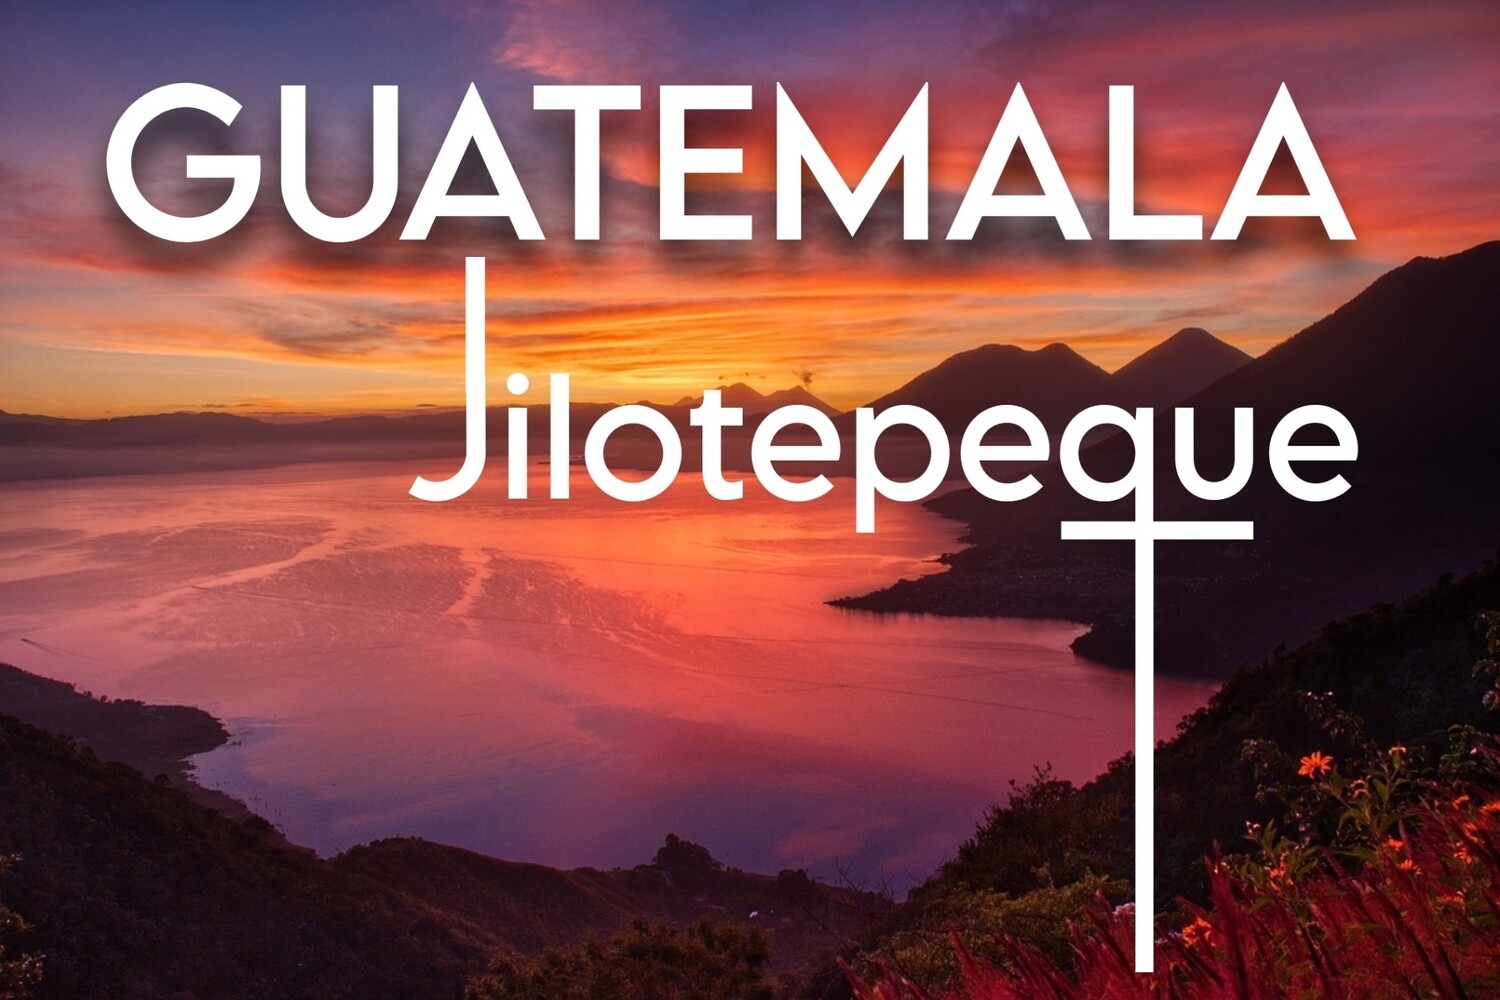 Guatemala Jilotepeque 